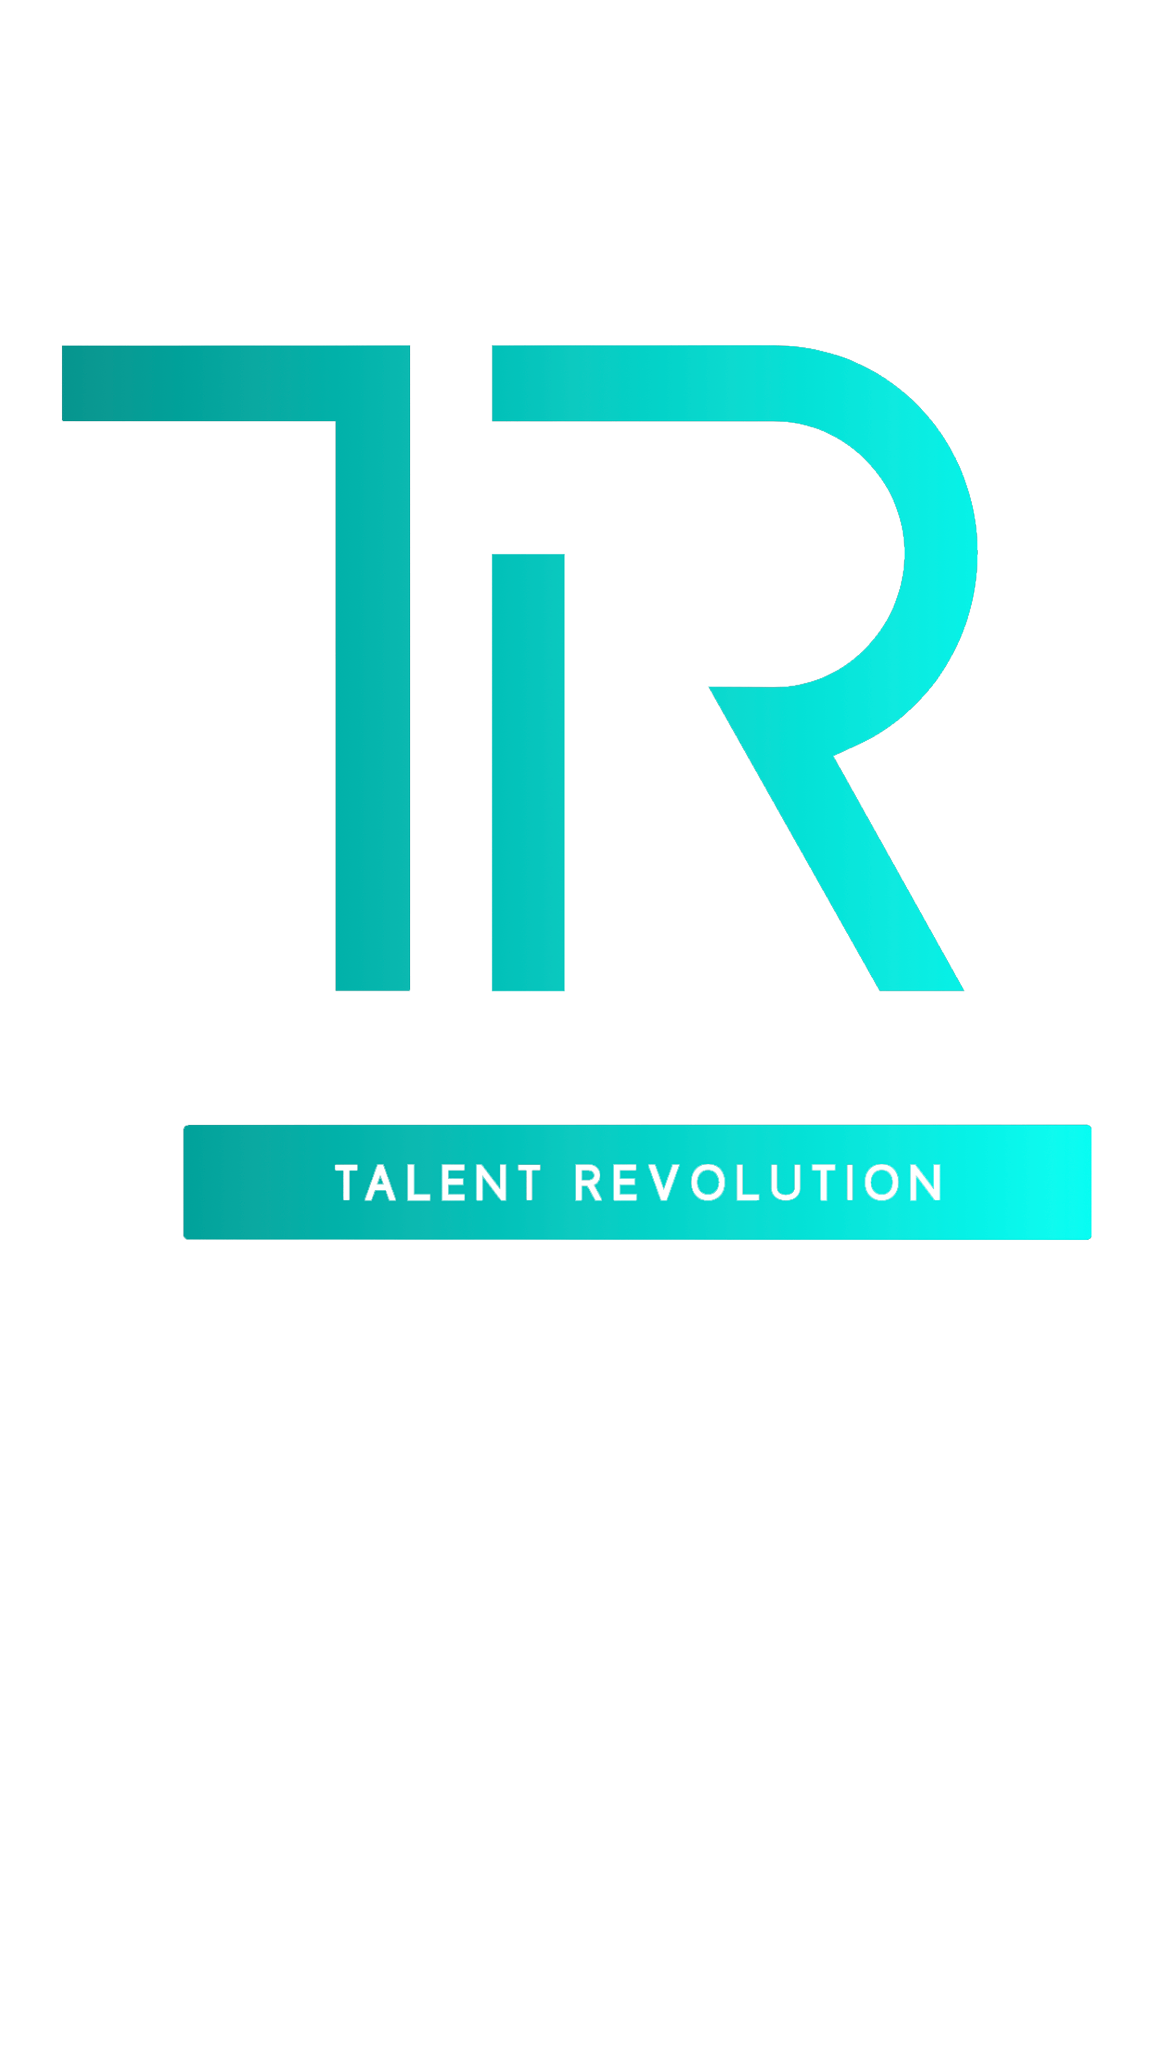 Talent revolution